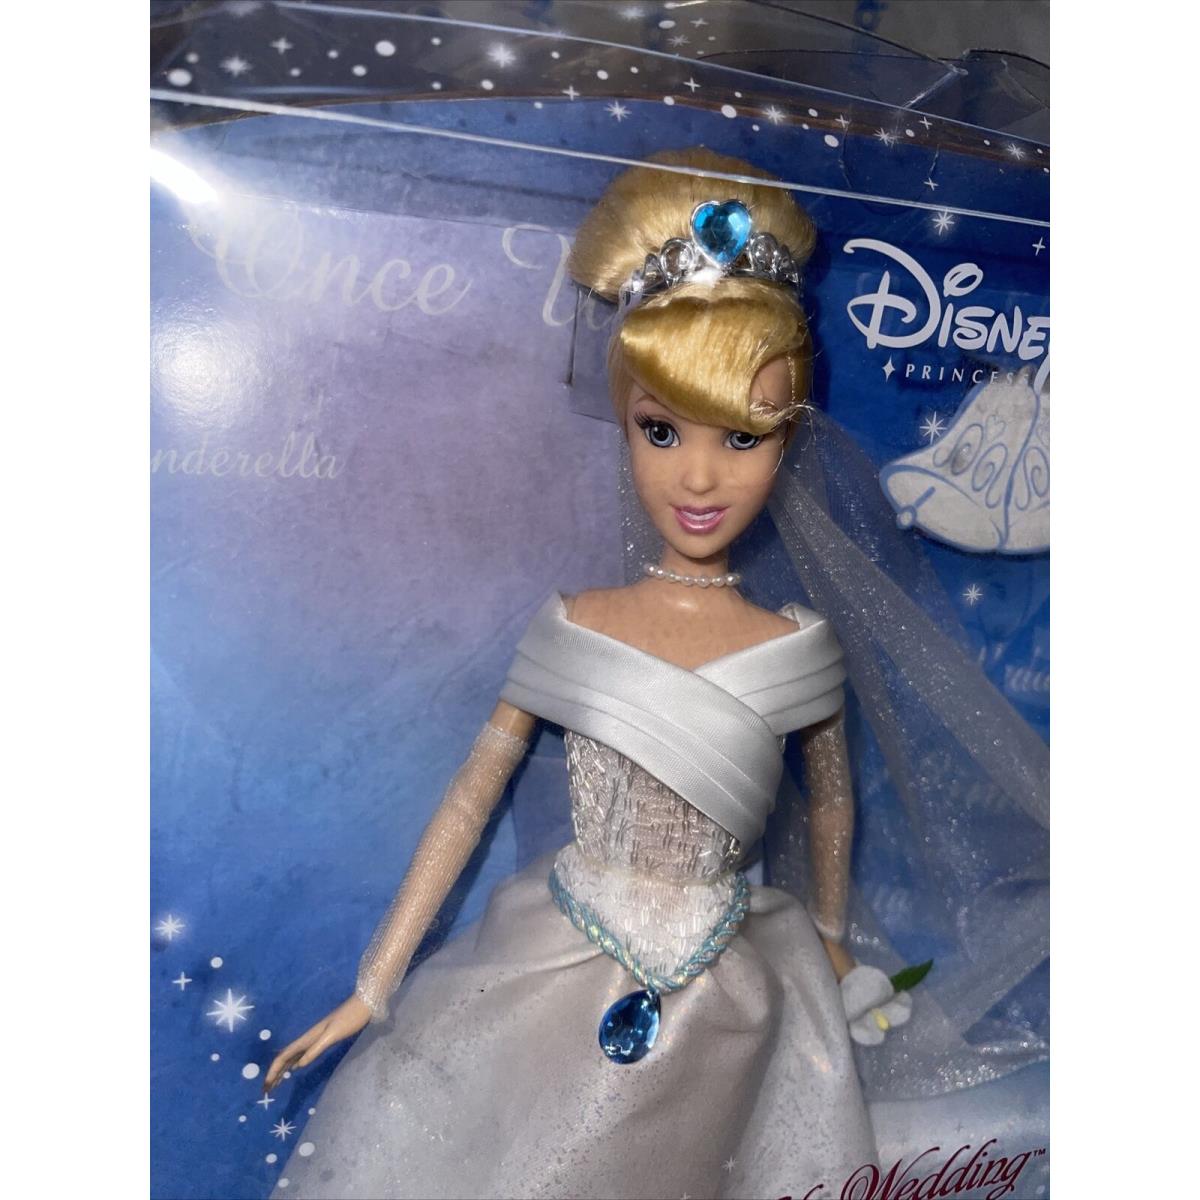 Disney Princess Fairytale Wedding Cinderella 2008 Collection Doll